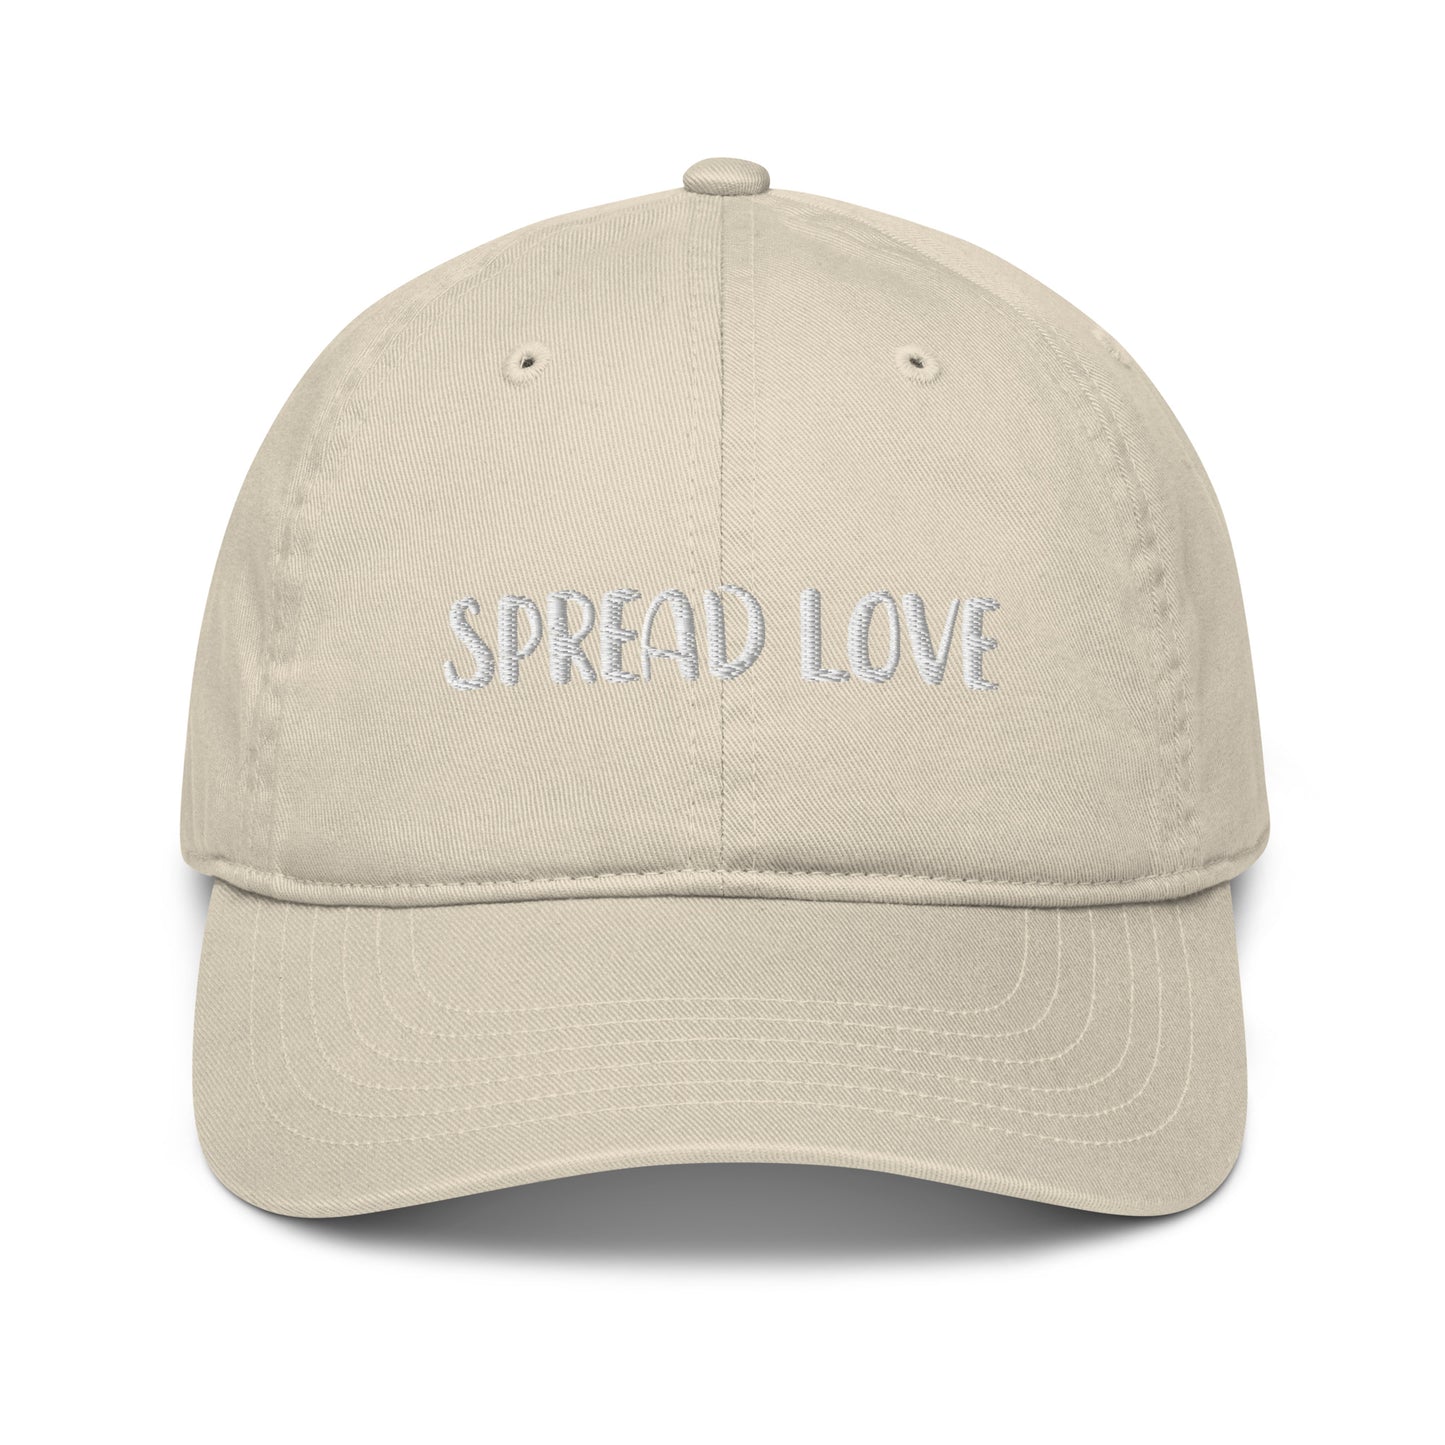 Organic Spread Love Hat